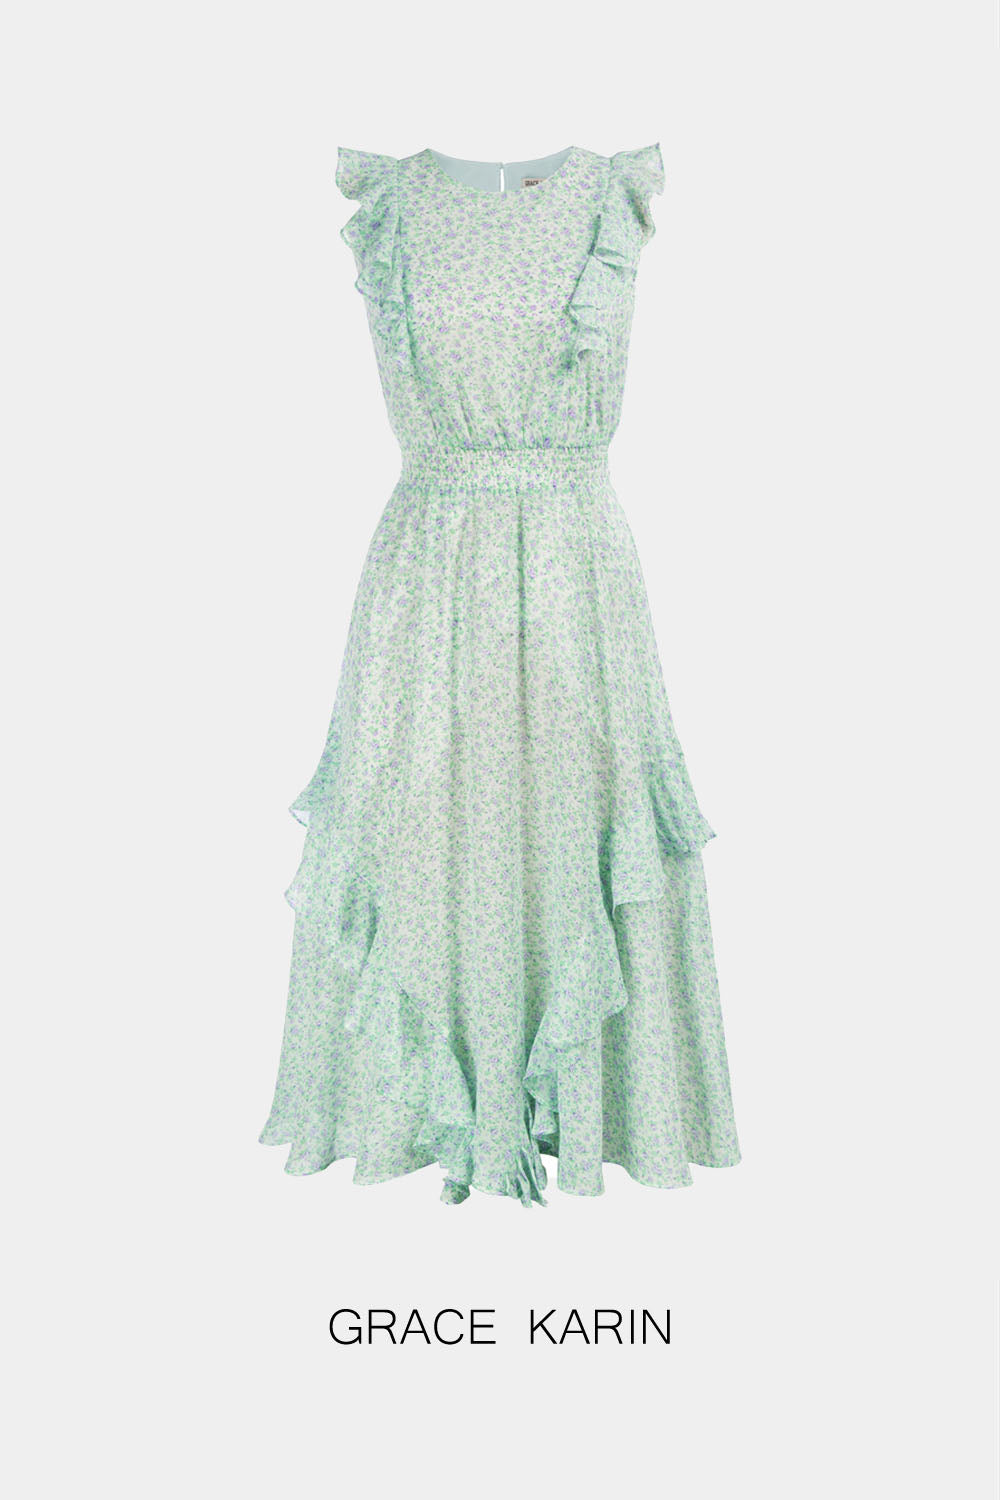 【$19.99 Flash Sale!】GRACE KARIN  Ruffle Decorated Sleeveless Crew Neck  Midi Dress